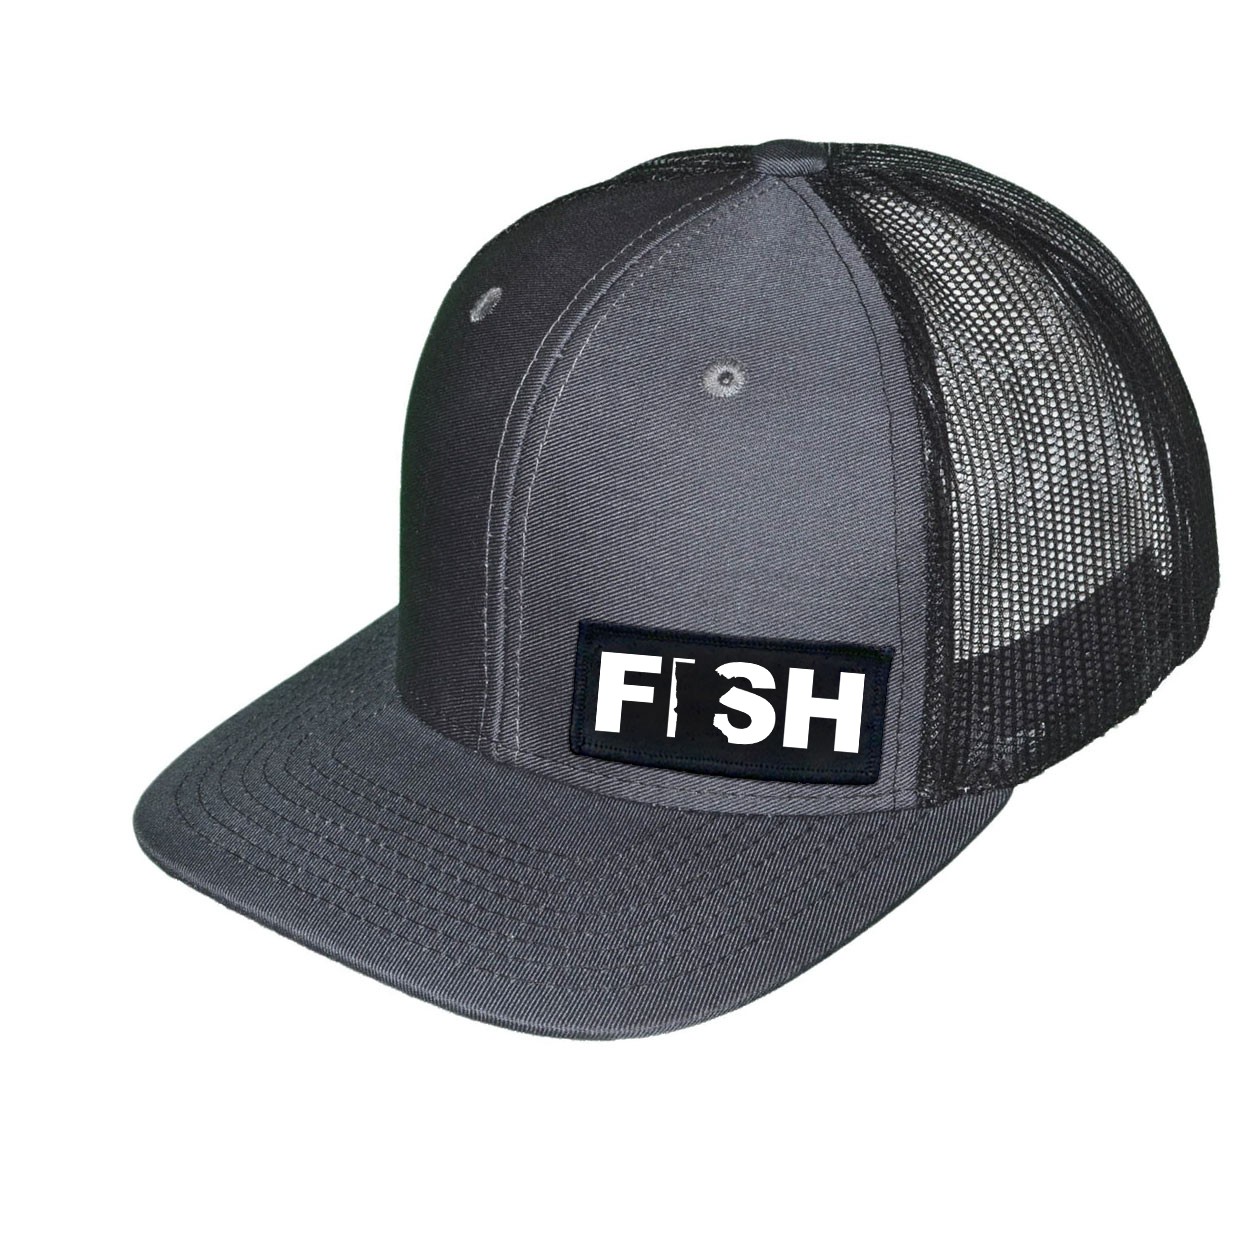 Fish Minnesota Night Out Woven Patch Snapback Trucker Hat Gray/Black (White Logo)